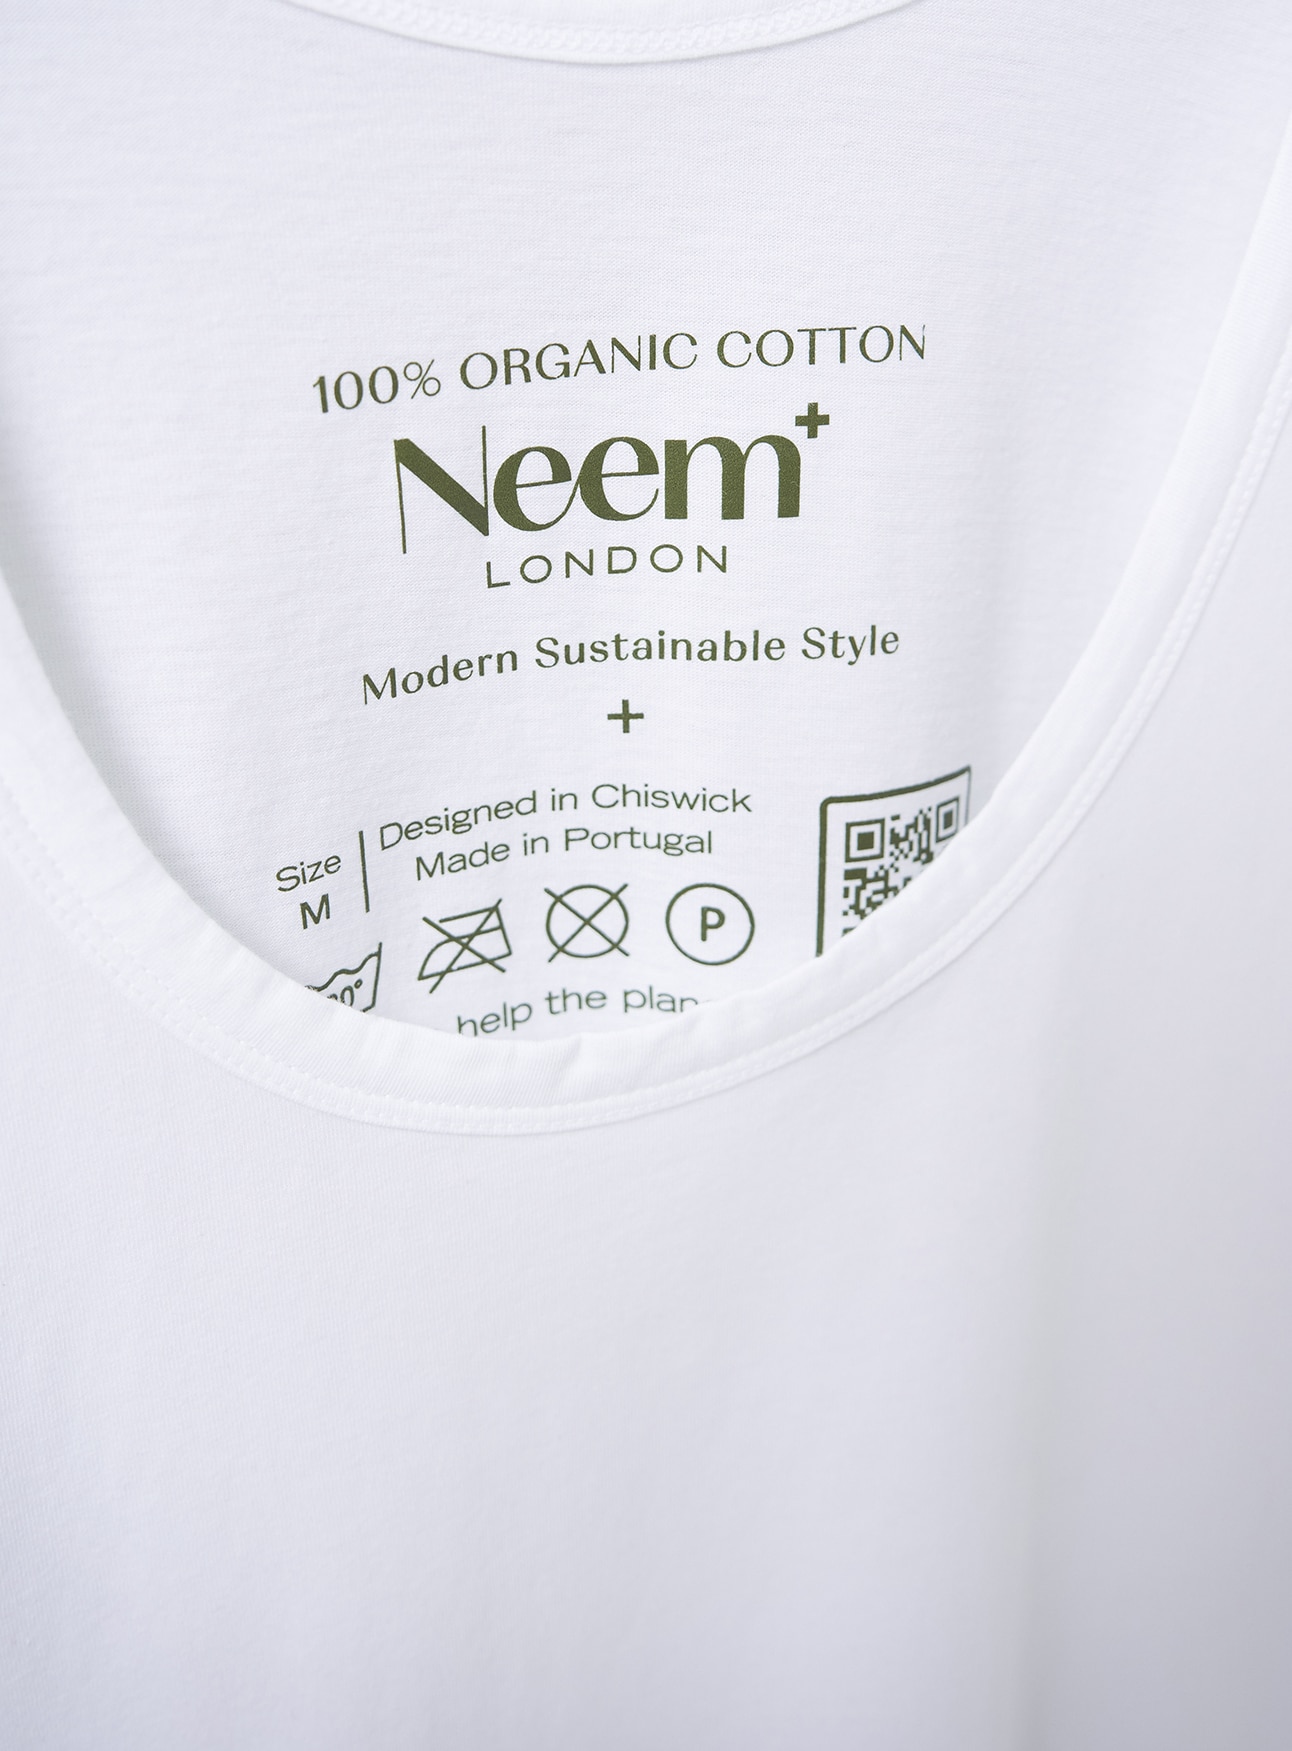 Neem London white organic cotton tee